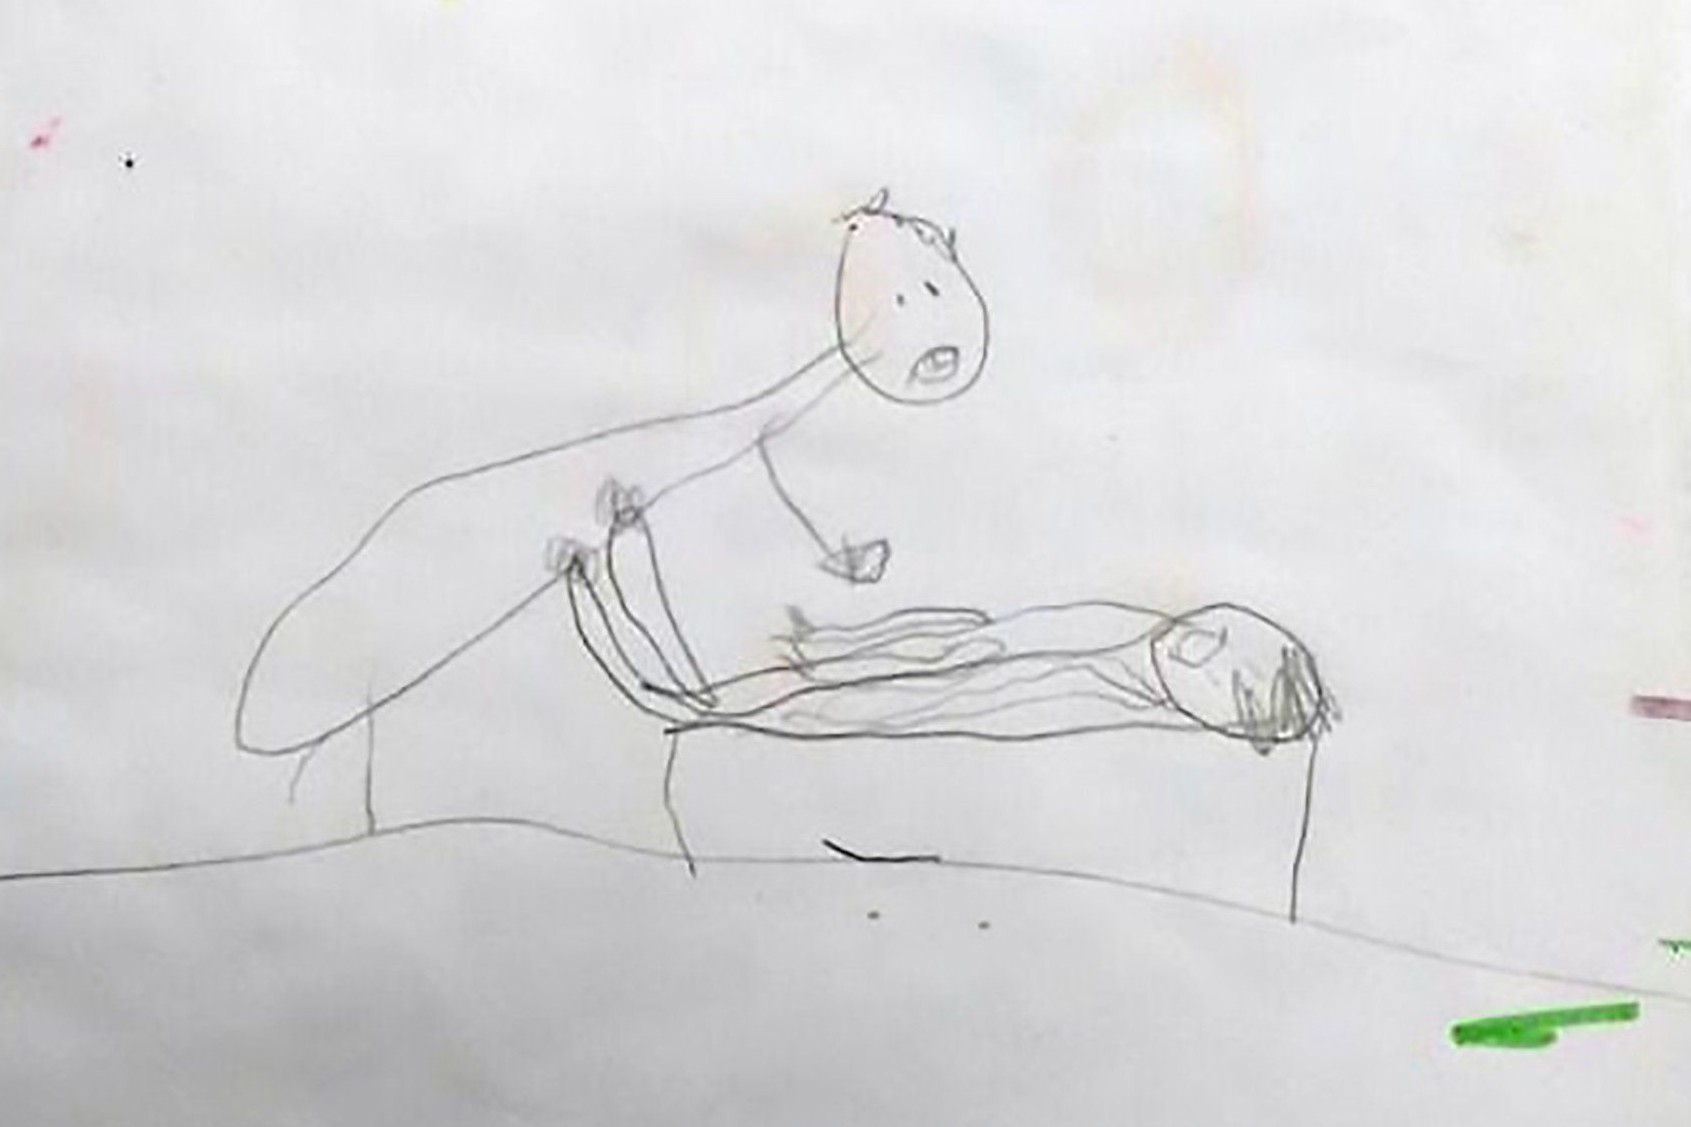 Gambar bocah 5 tahun ini ungkap pelecehan seksual yang mengerikan, duh